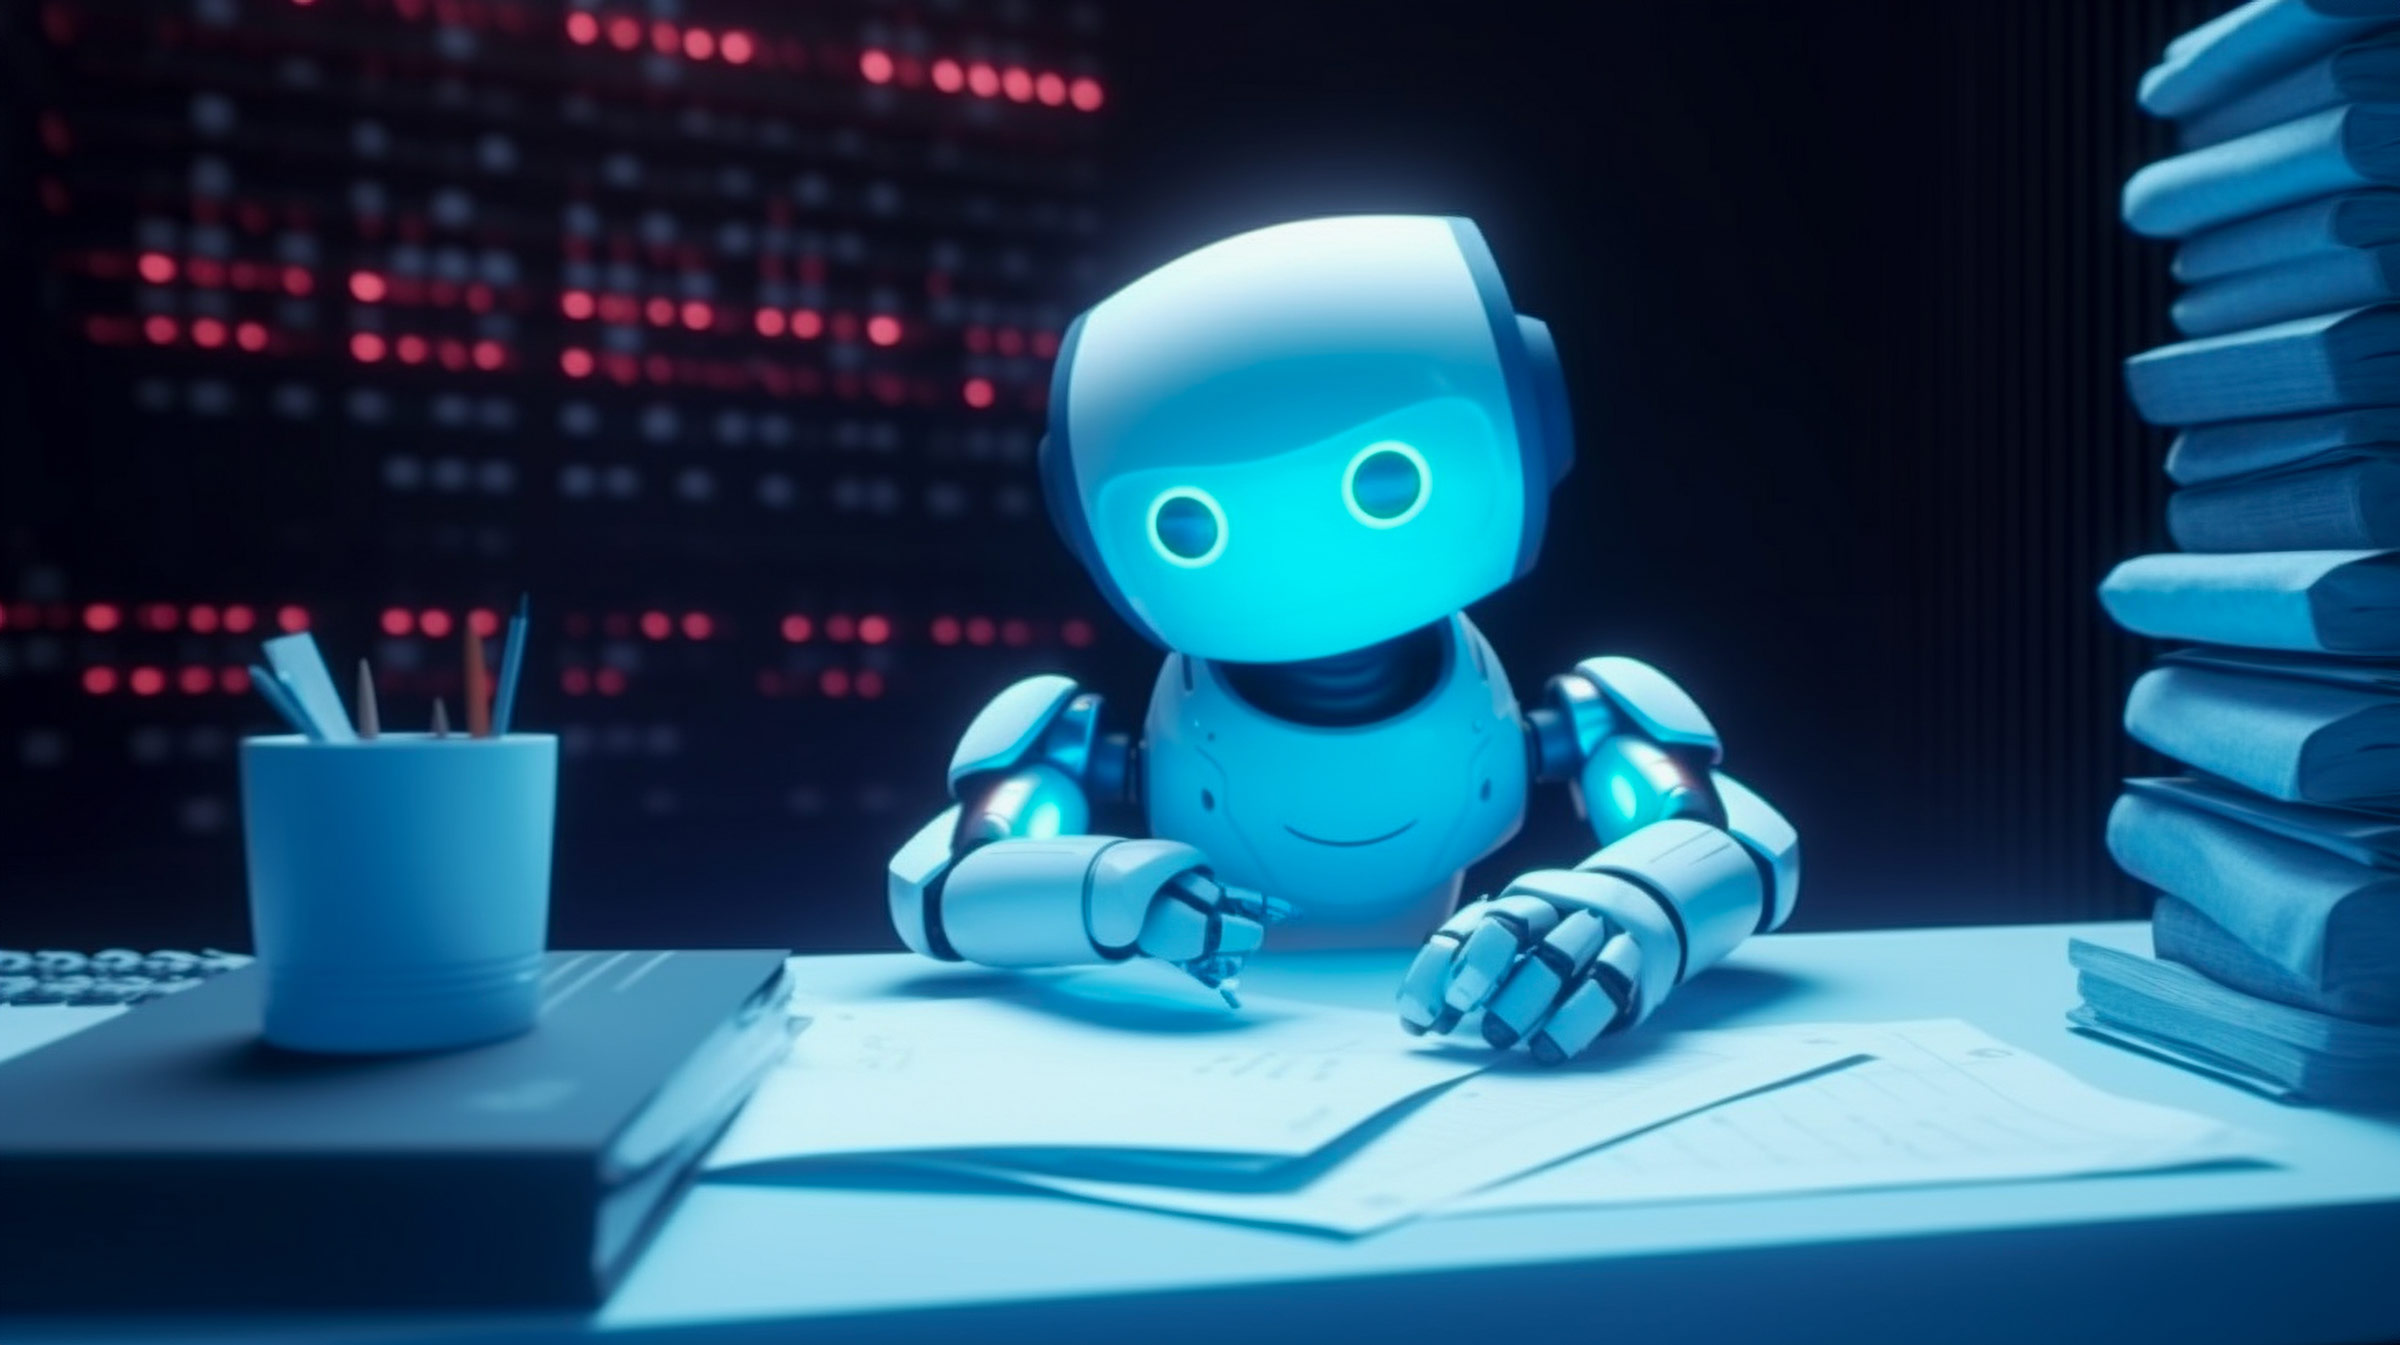 Programming Robots